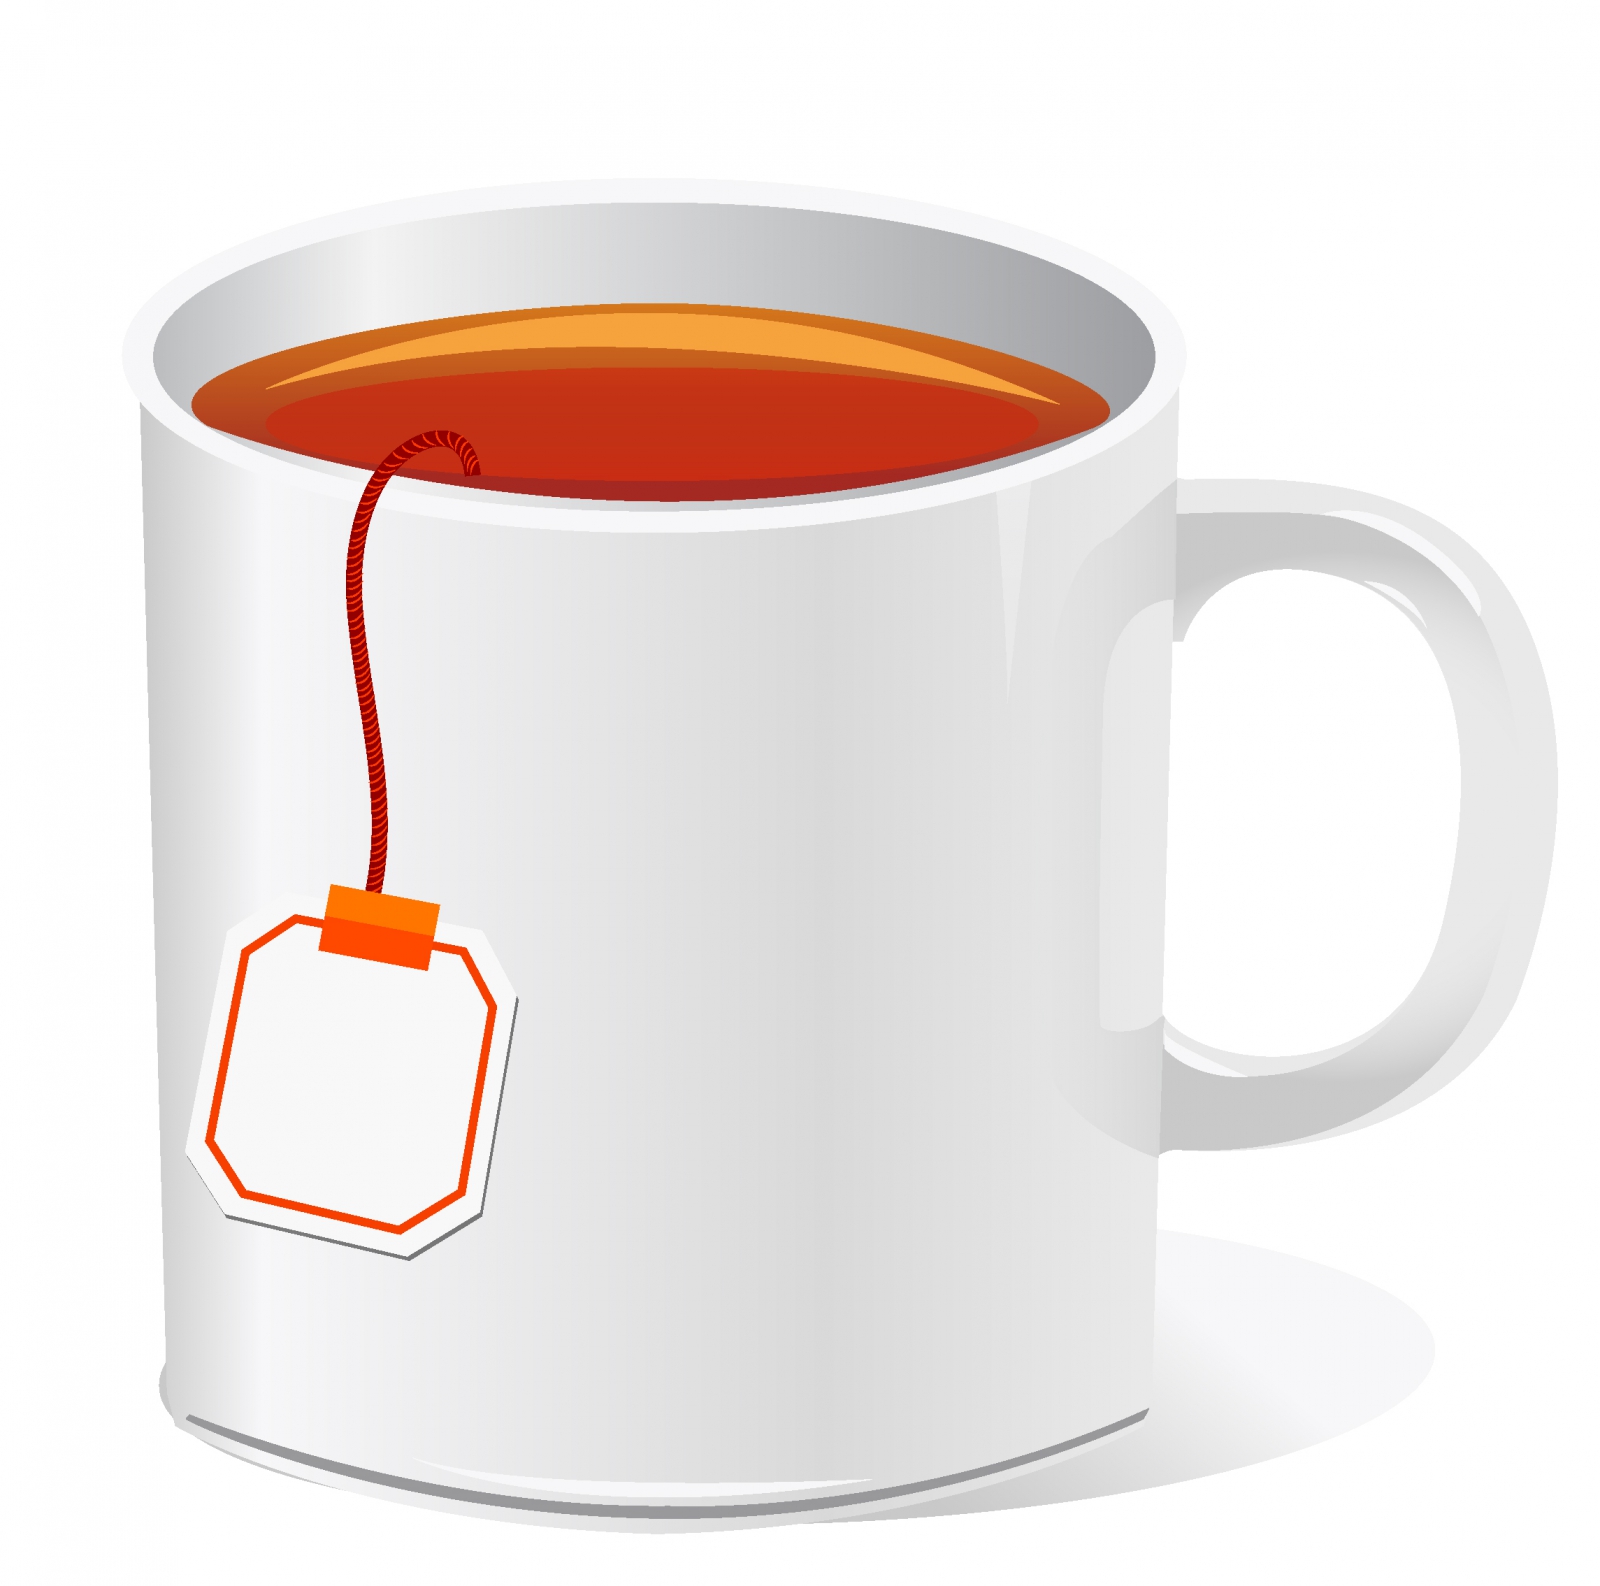 A mug of hot tea